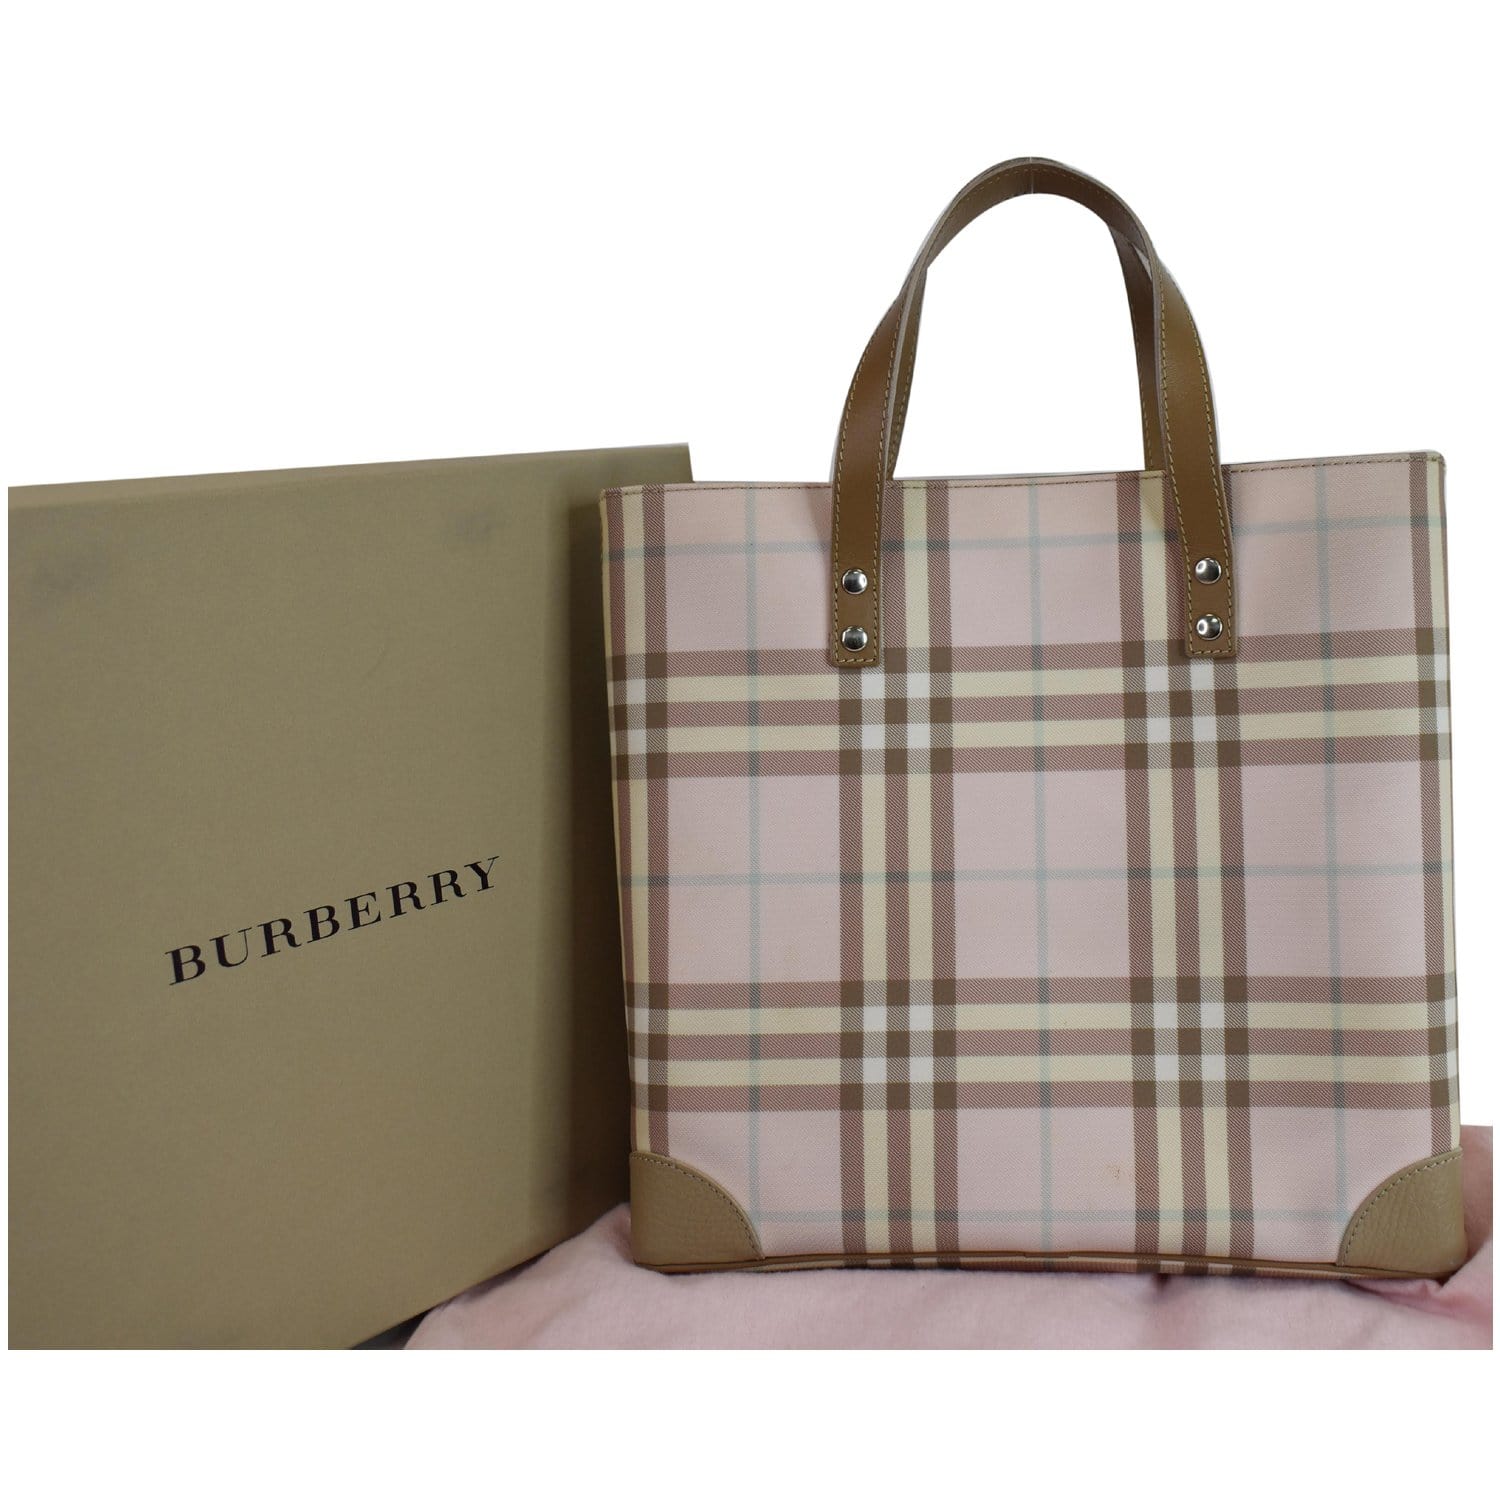 Burberry London Tote Bag (Neverfull)